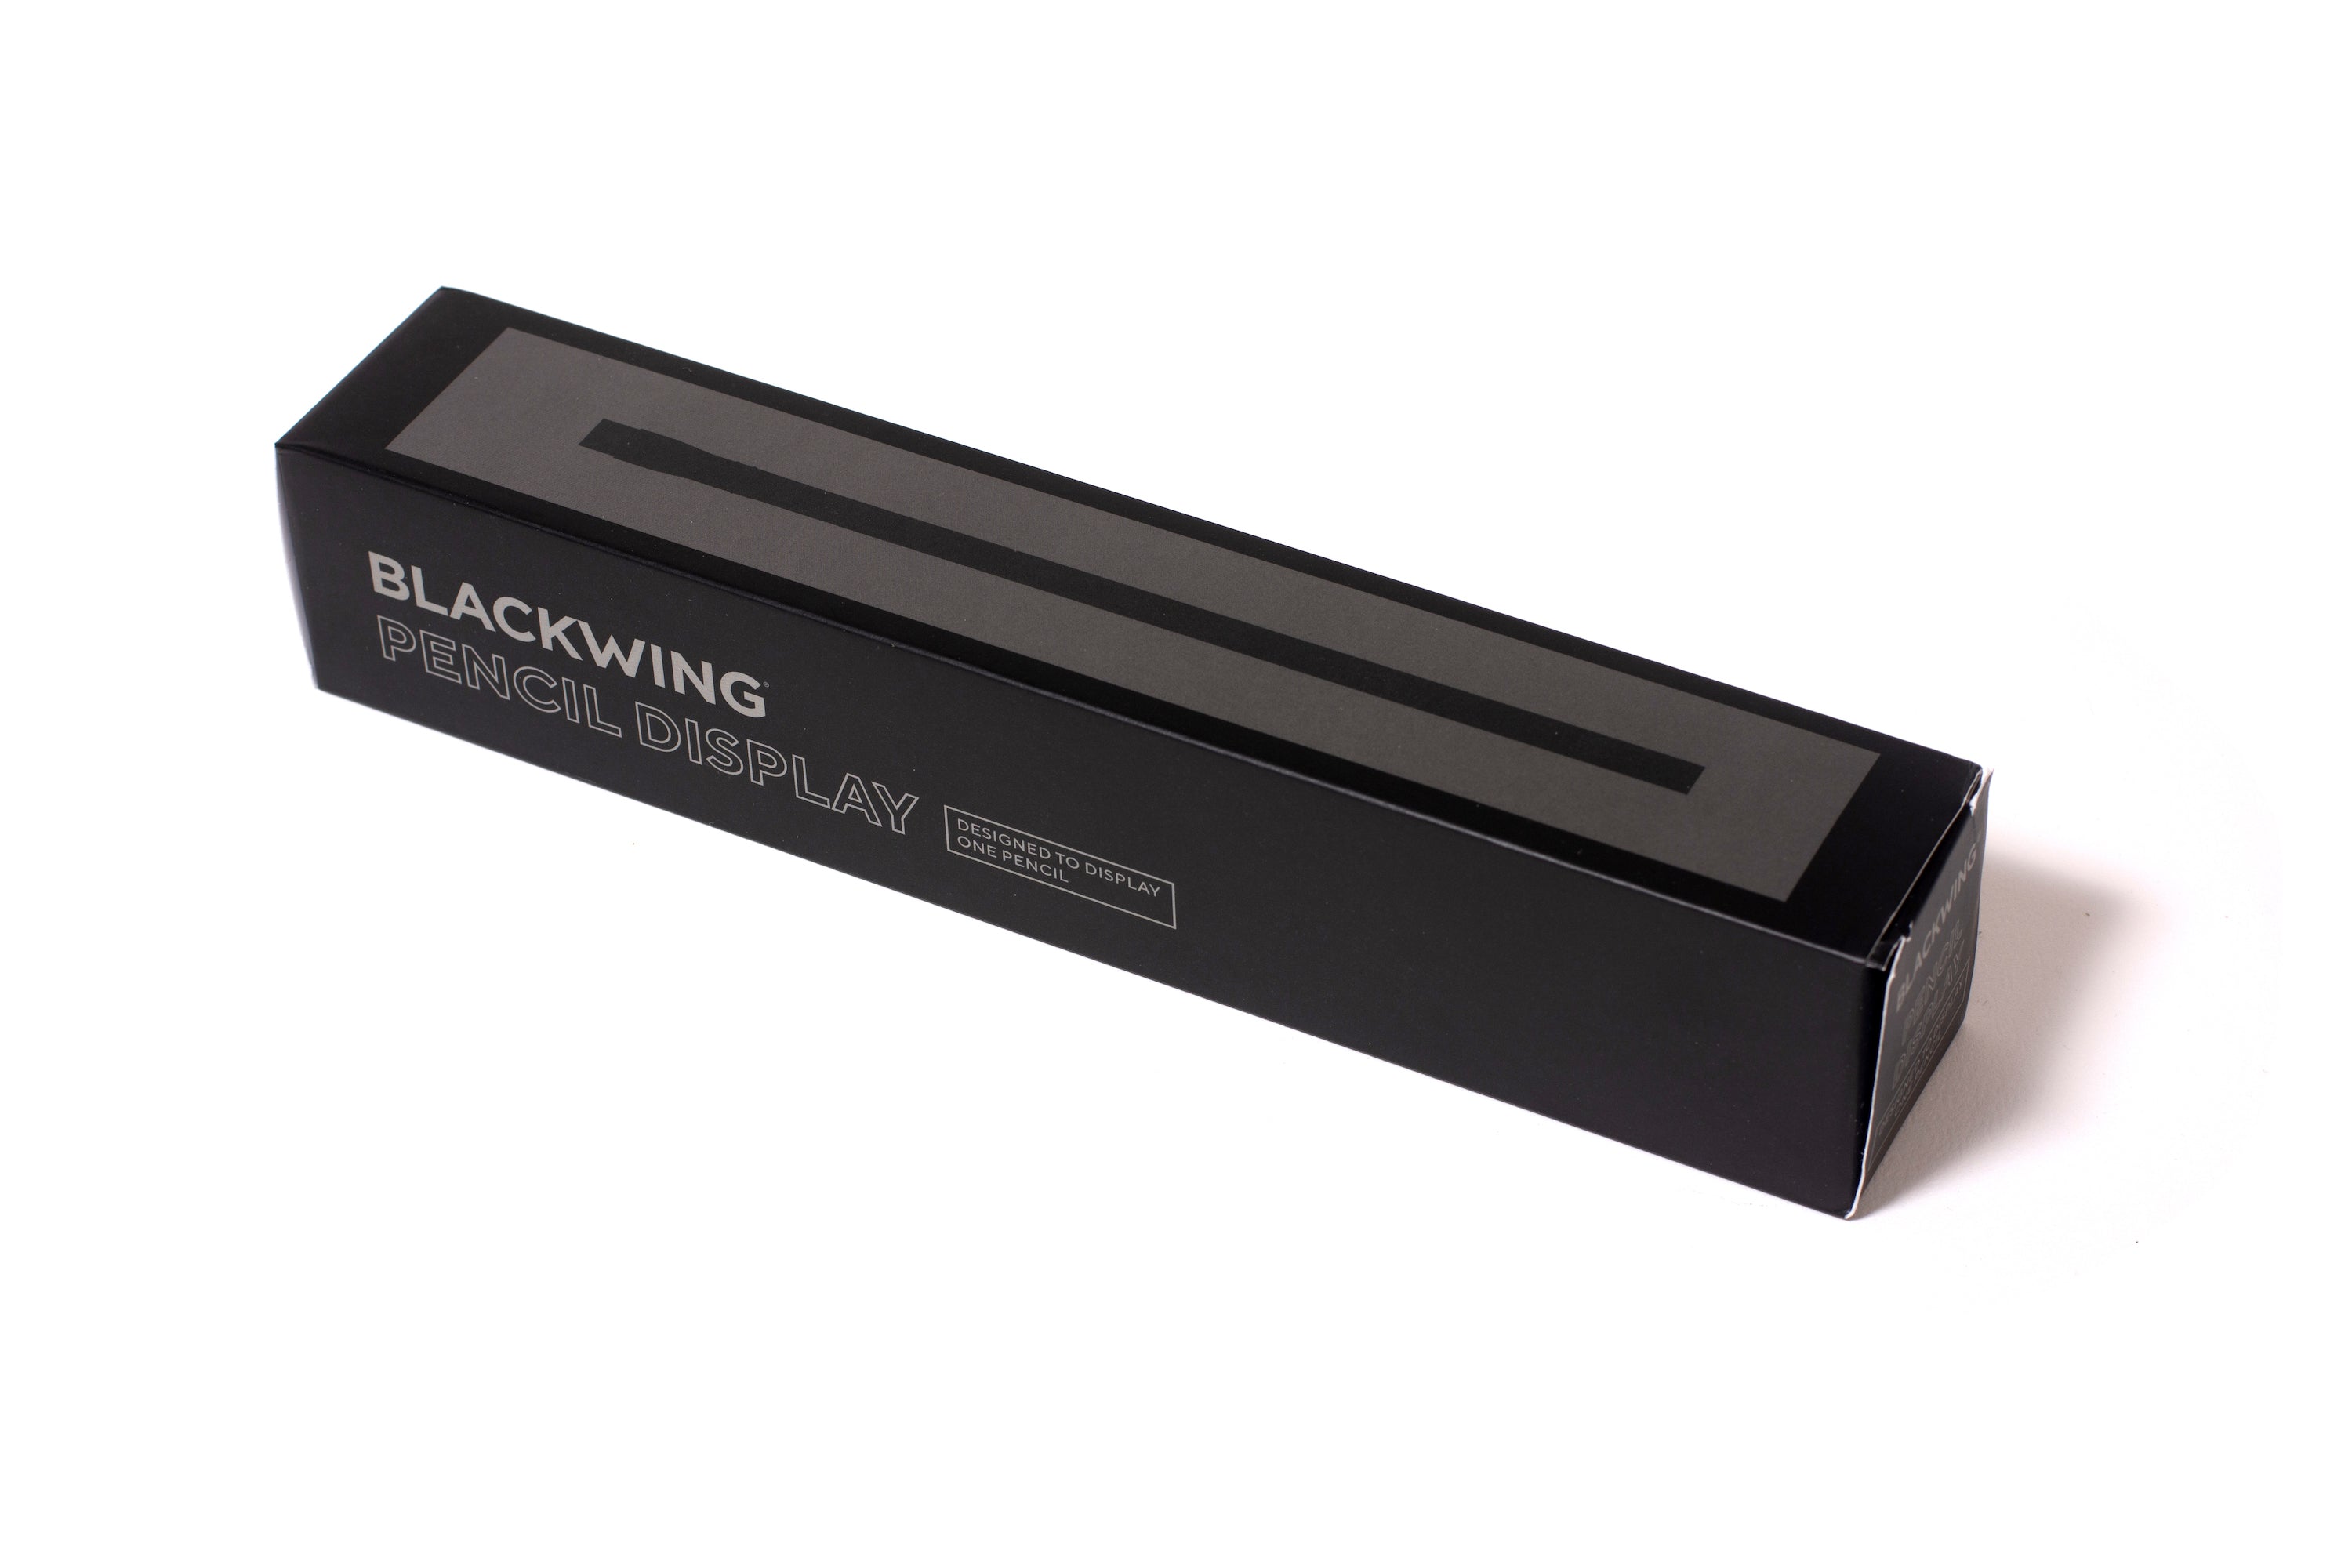 Blackwing Flat Single Pencil Display